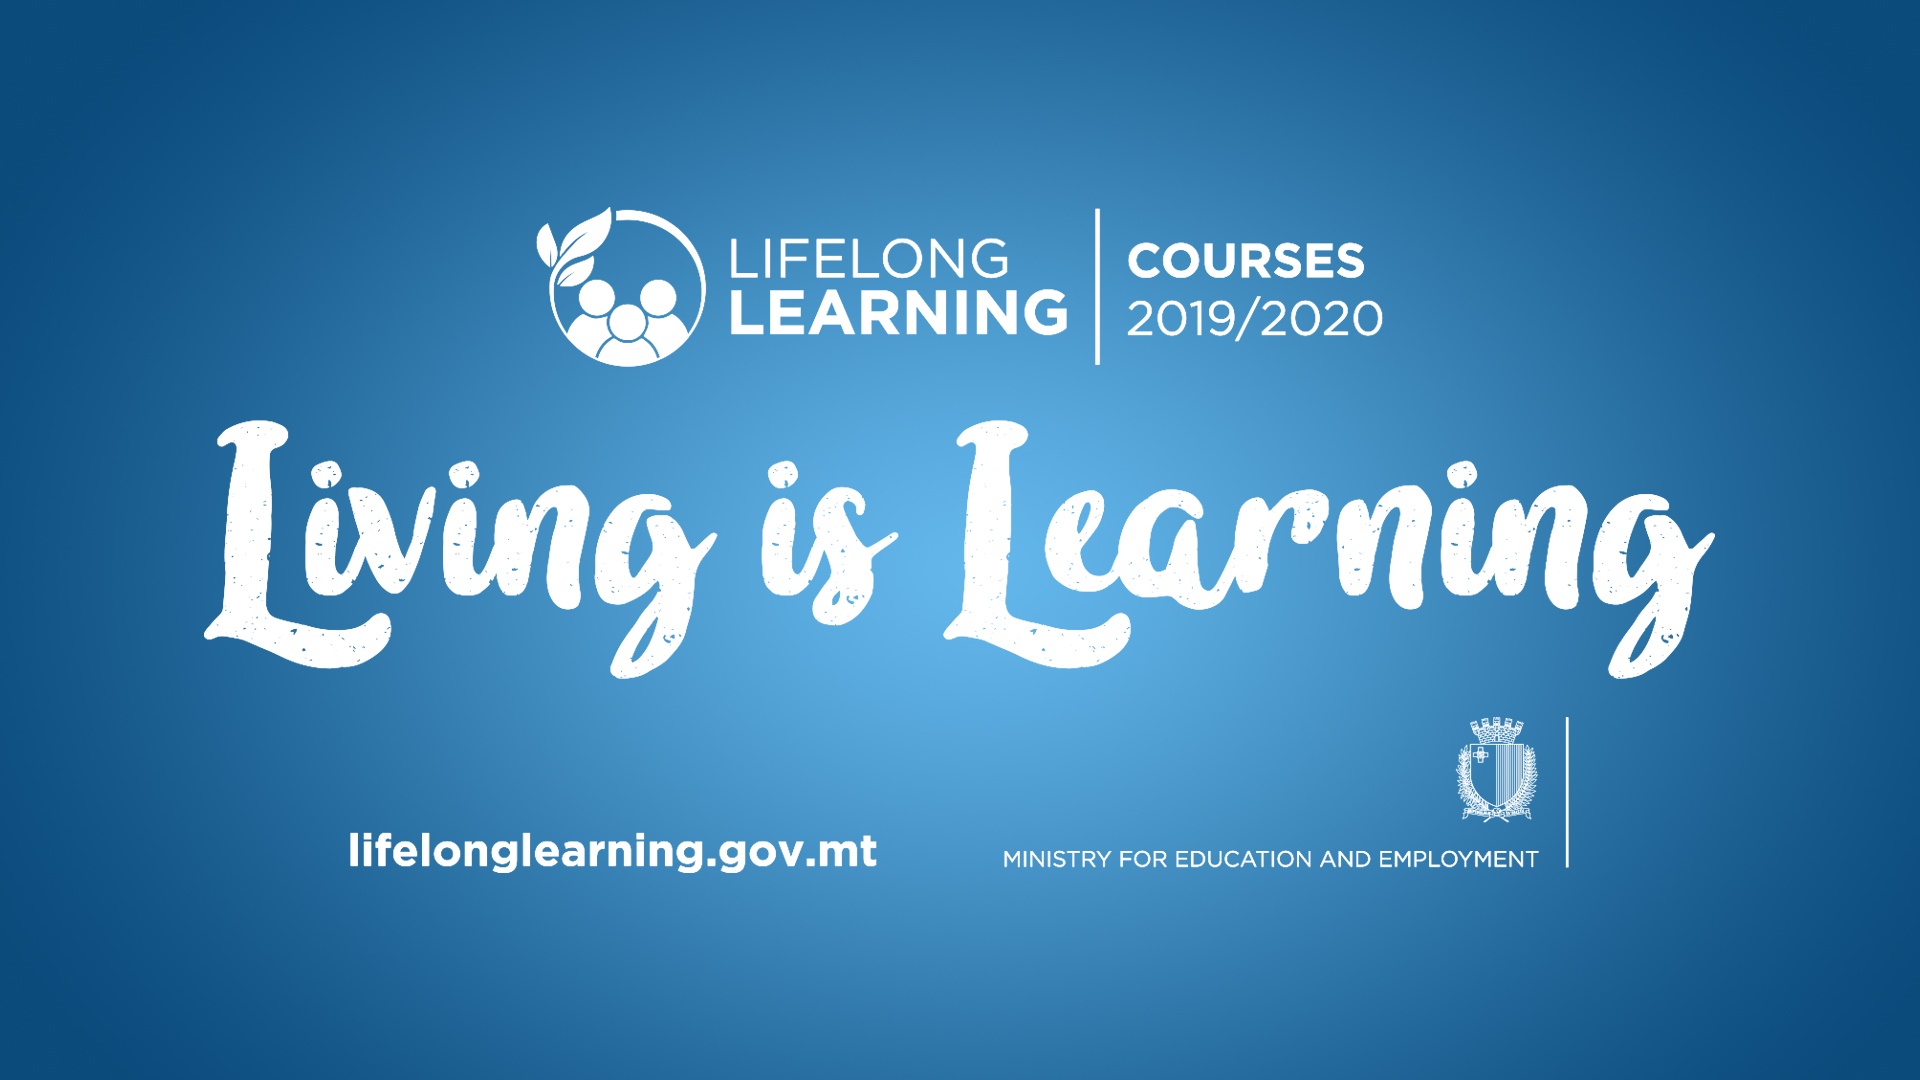 Lifelong Learning. Life Live Learning.